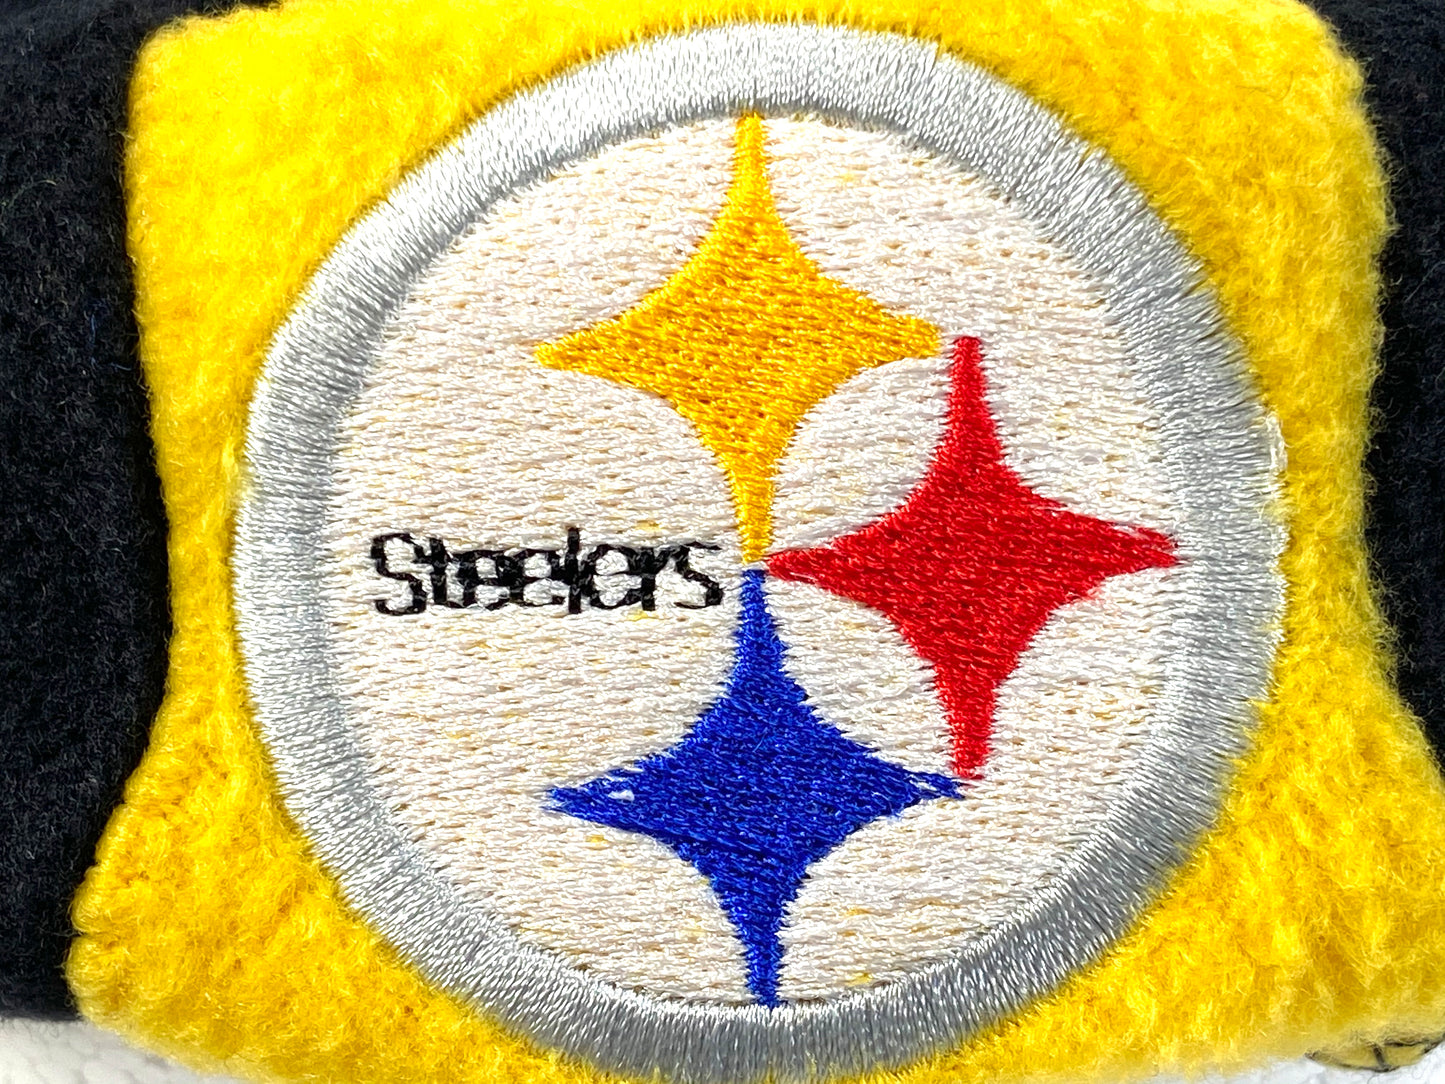 Pittsburgh Steelers NFL Fleece "Jughead" Style NOS Beanie by Drew Pearson Marketing